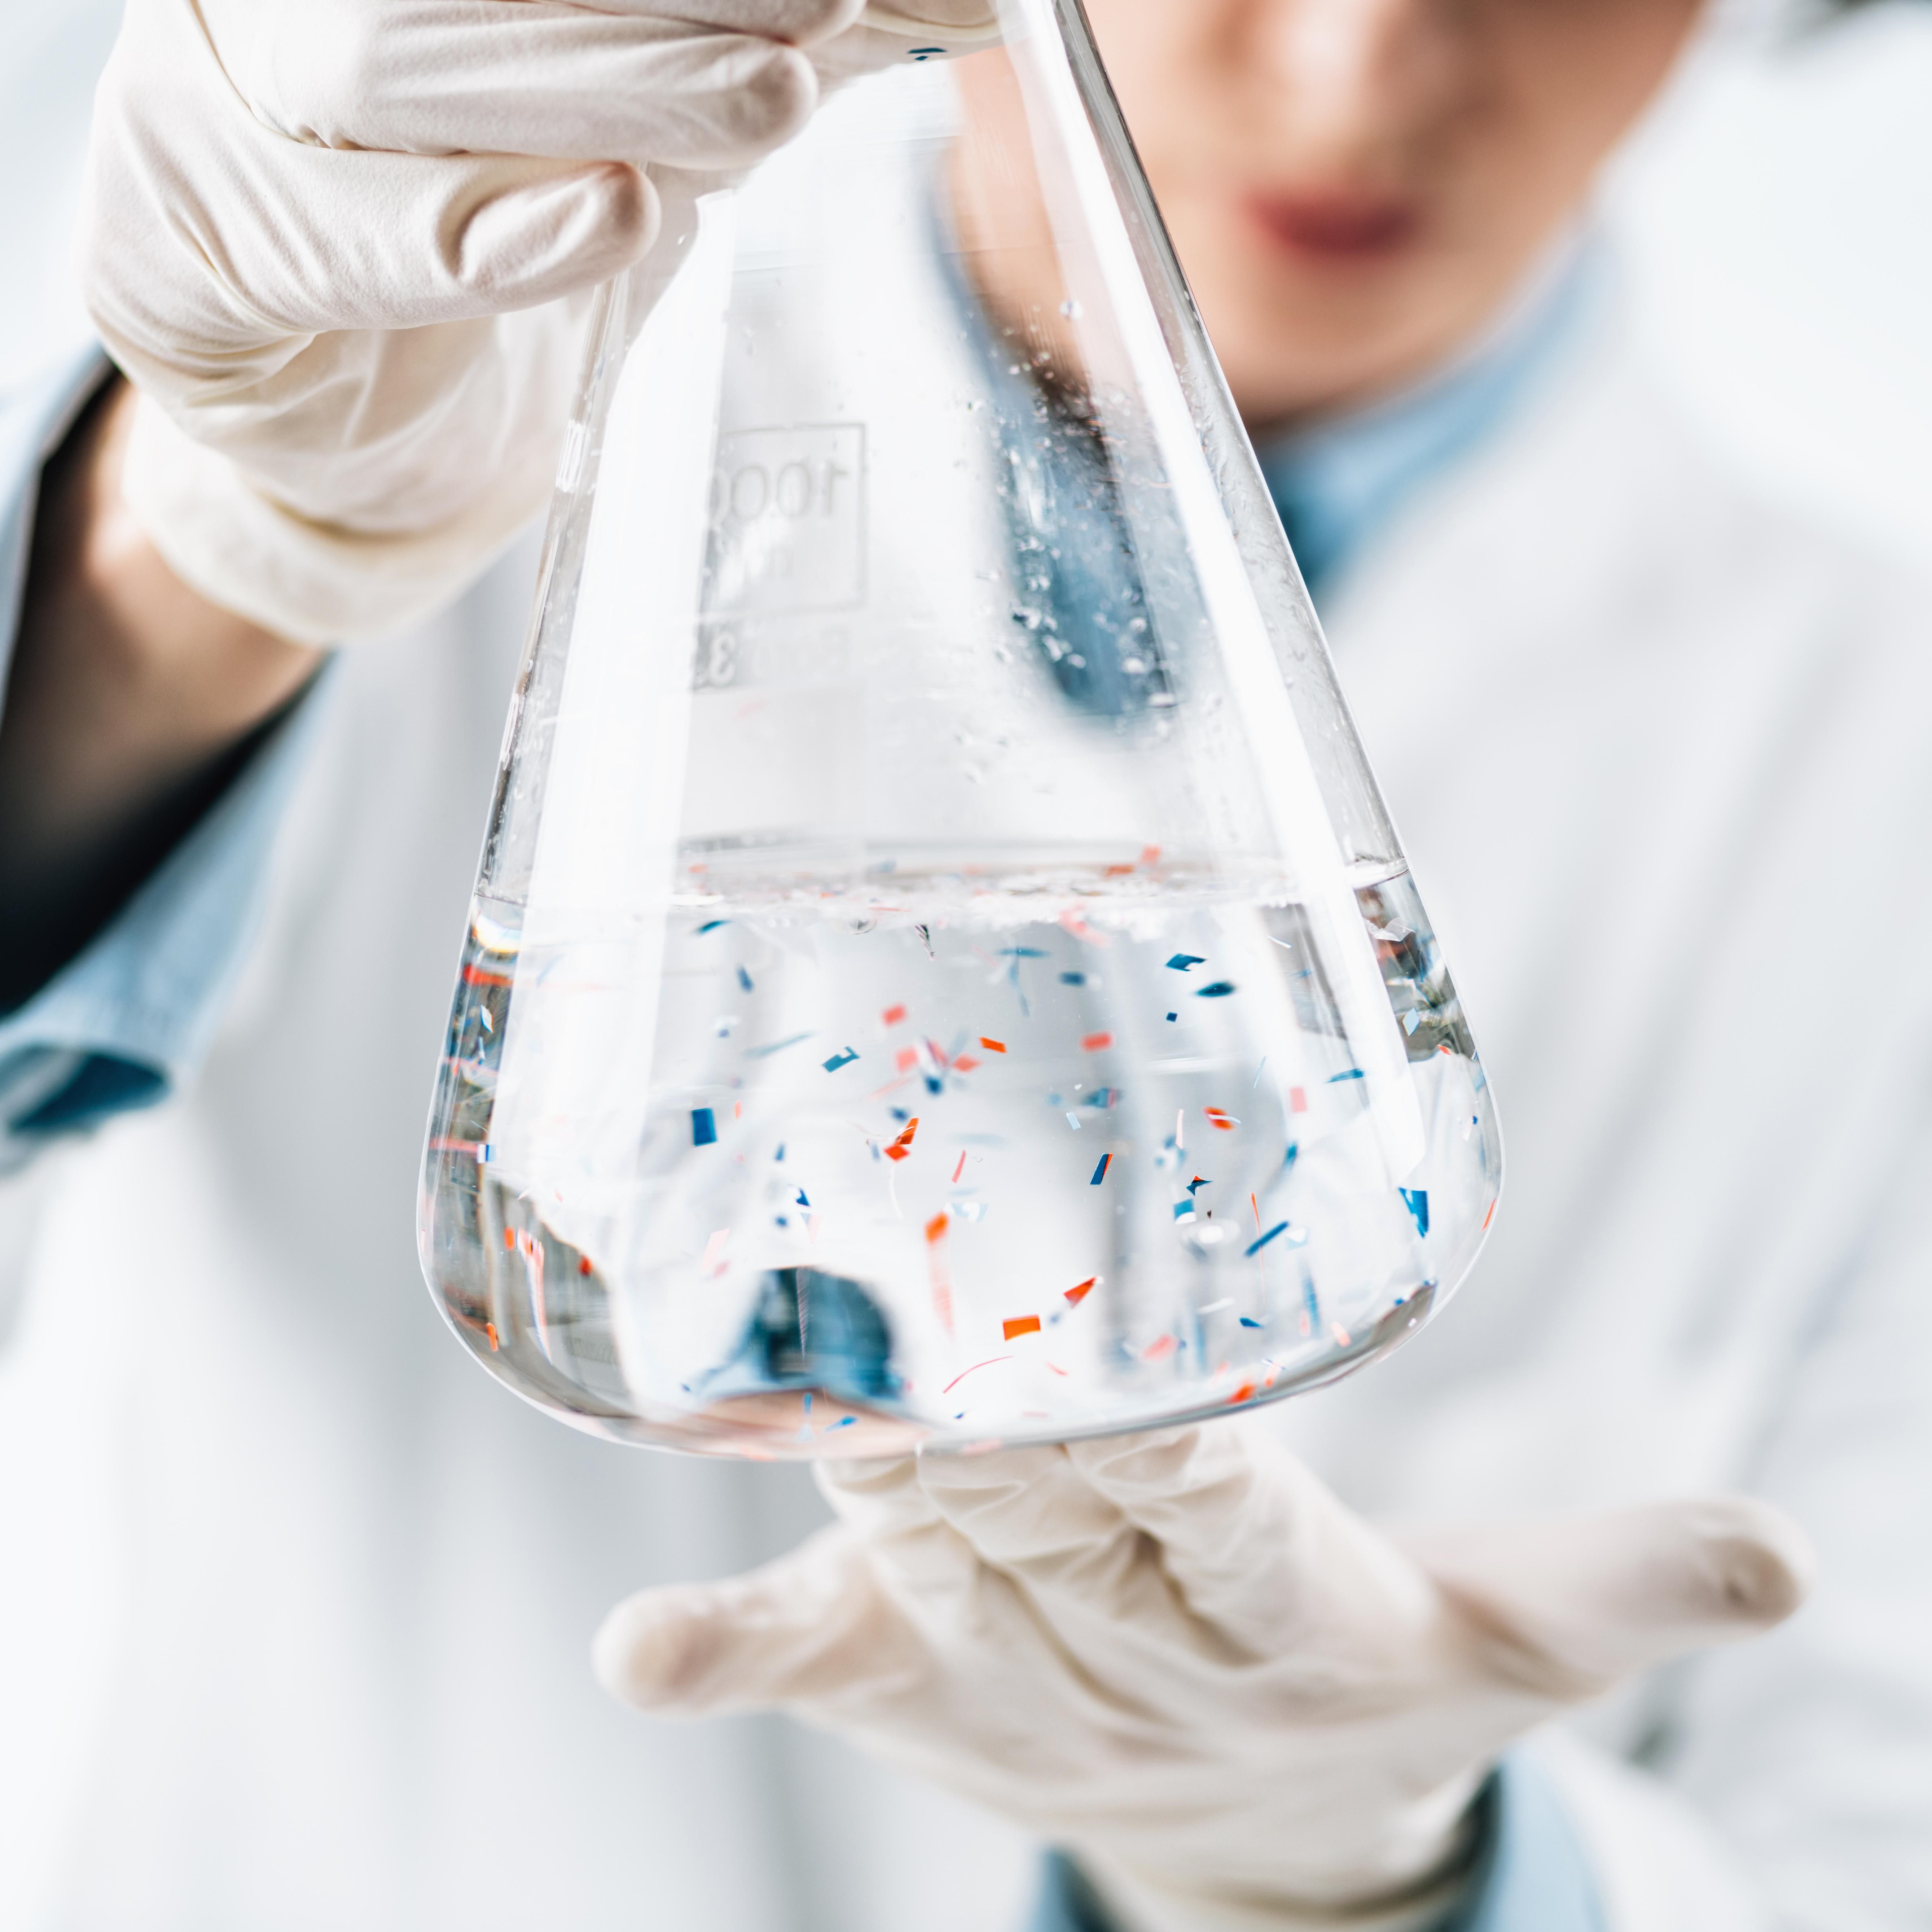 A scientist examines microplastics